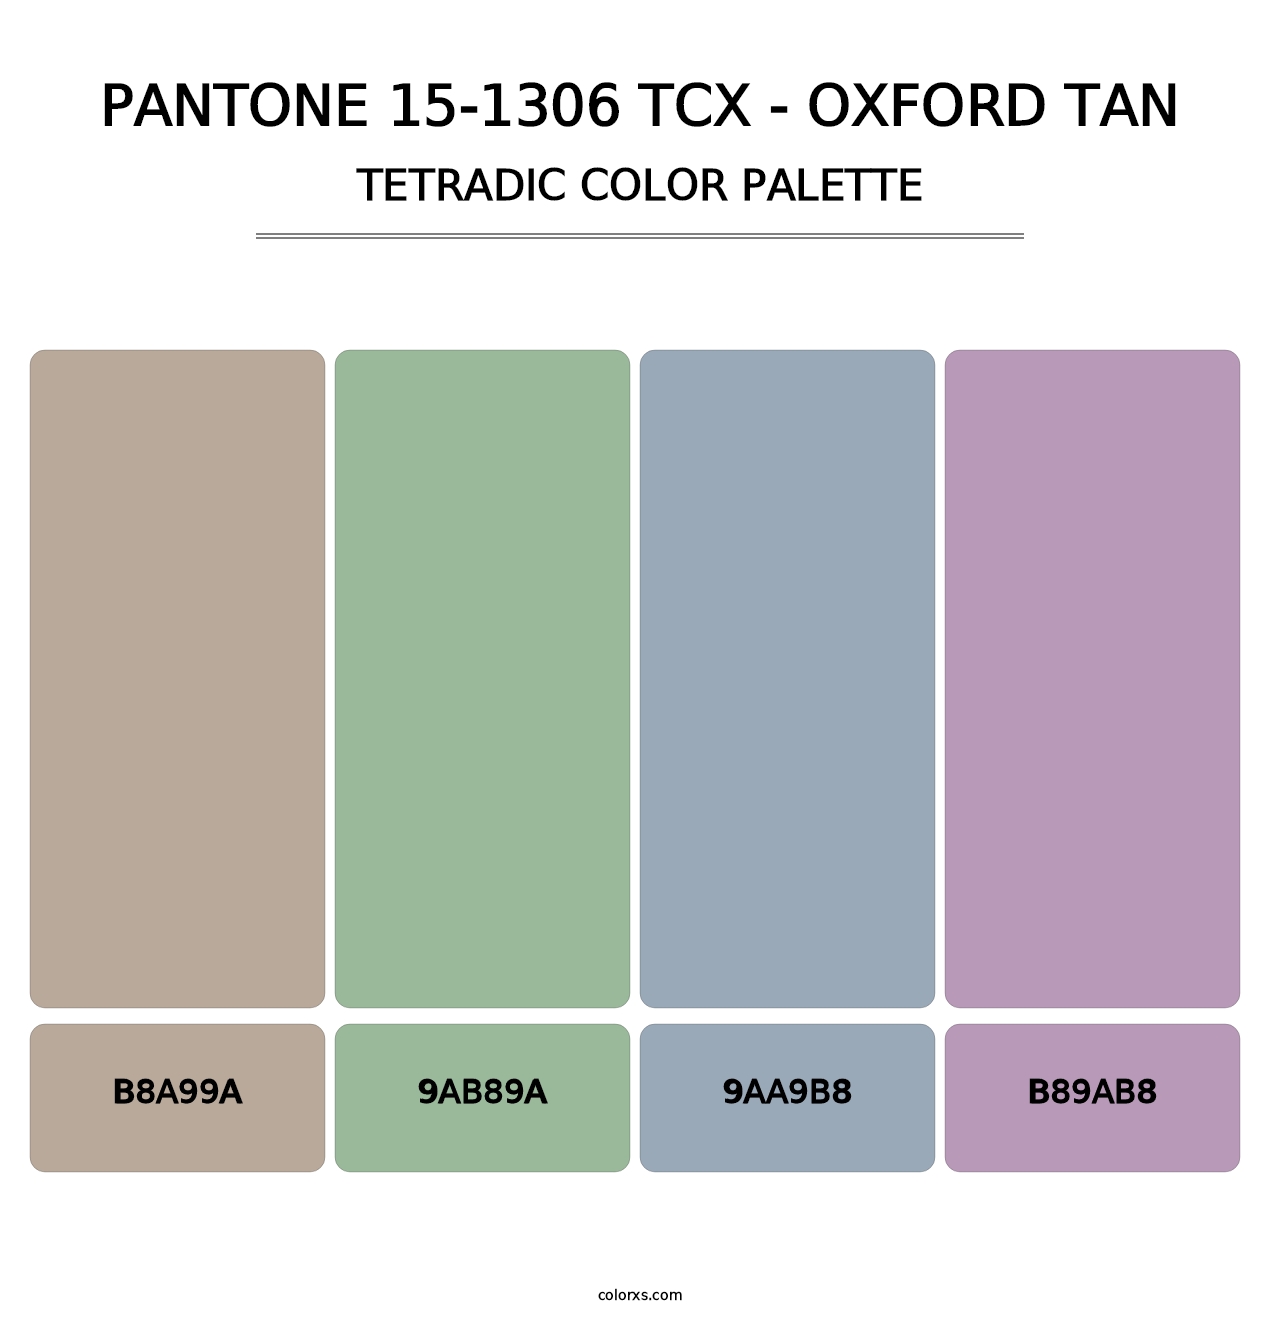 PANTONE 15-1306 TCX - Oxford Tan - Tetradic Color Palette